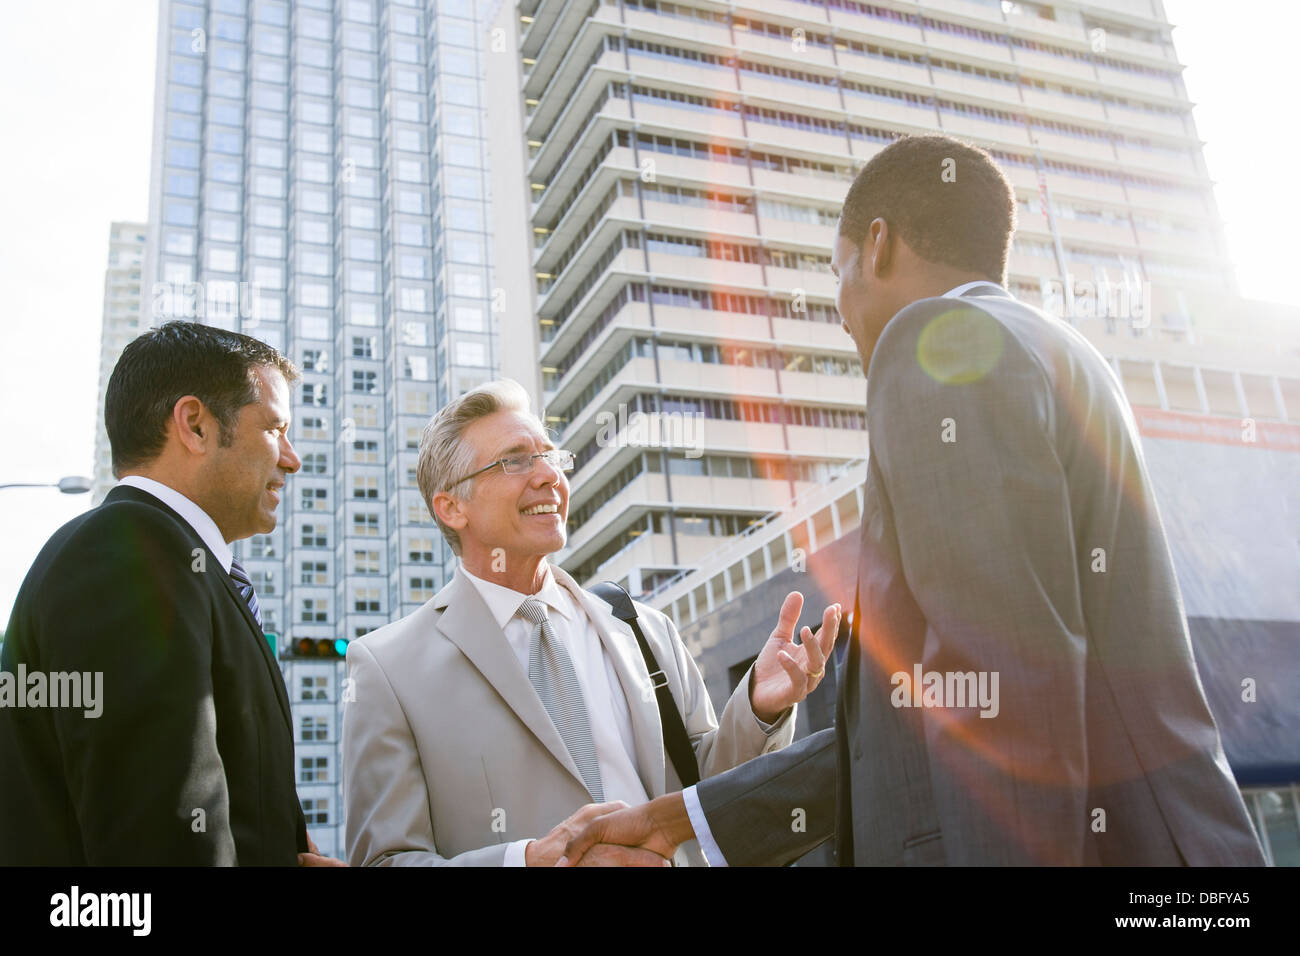 Businessmen shaking hands on city street Stock Photo